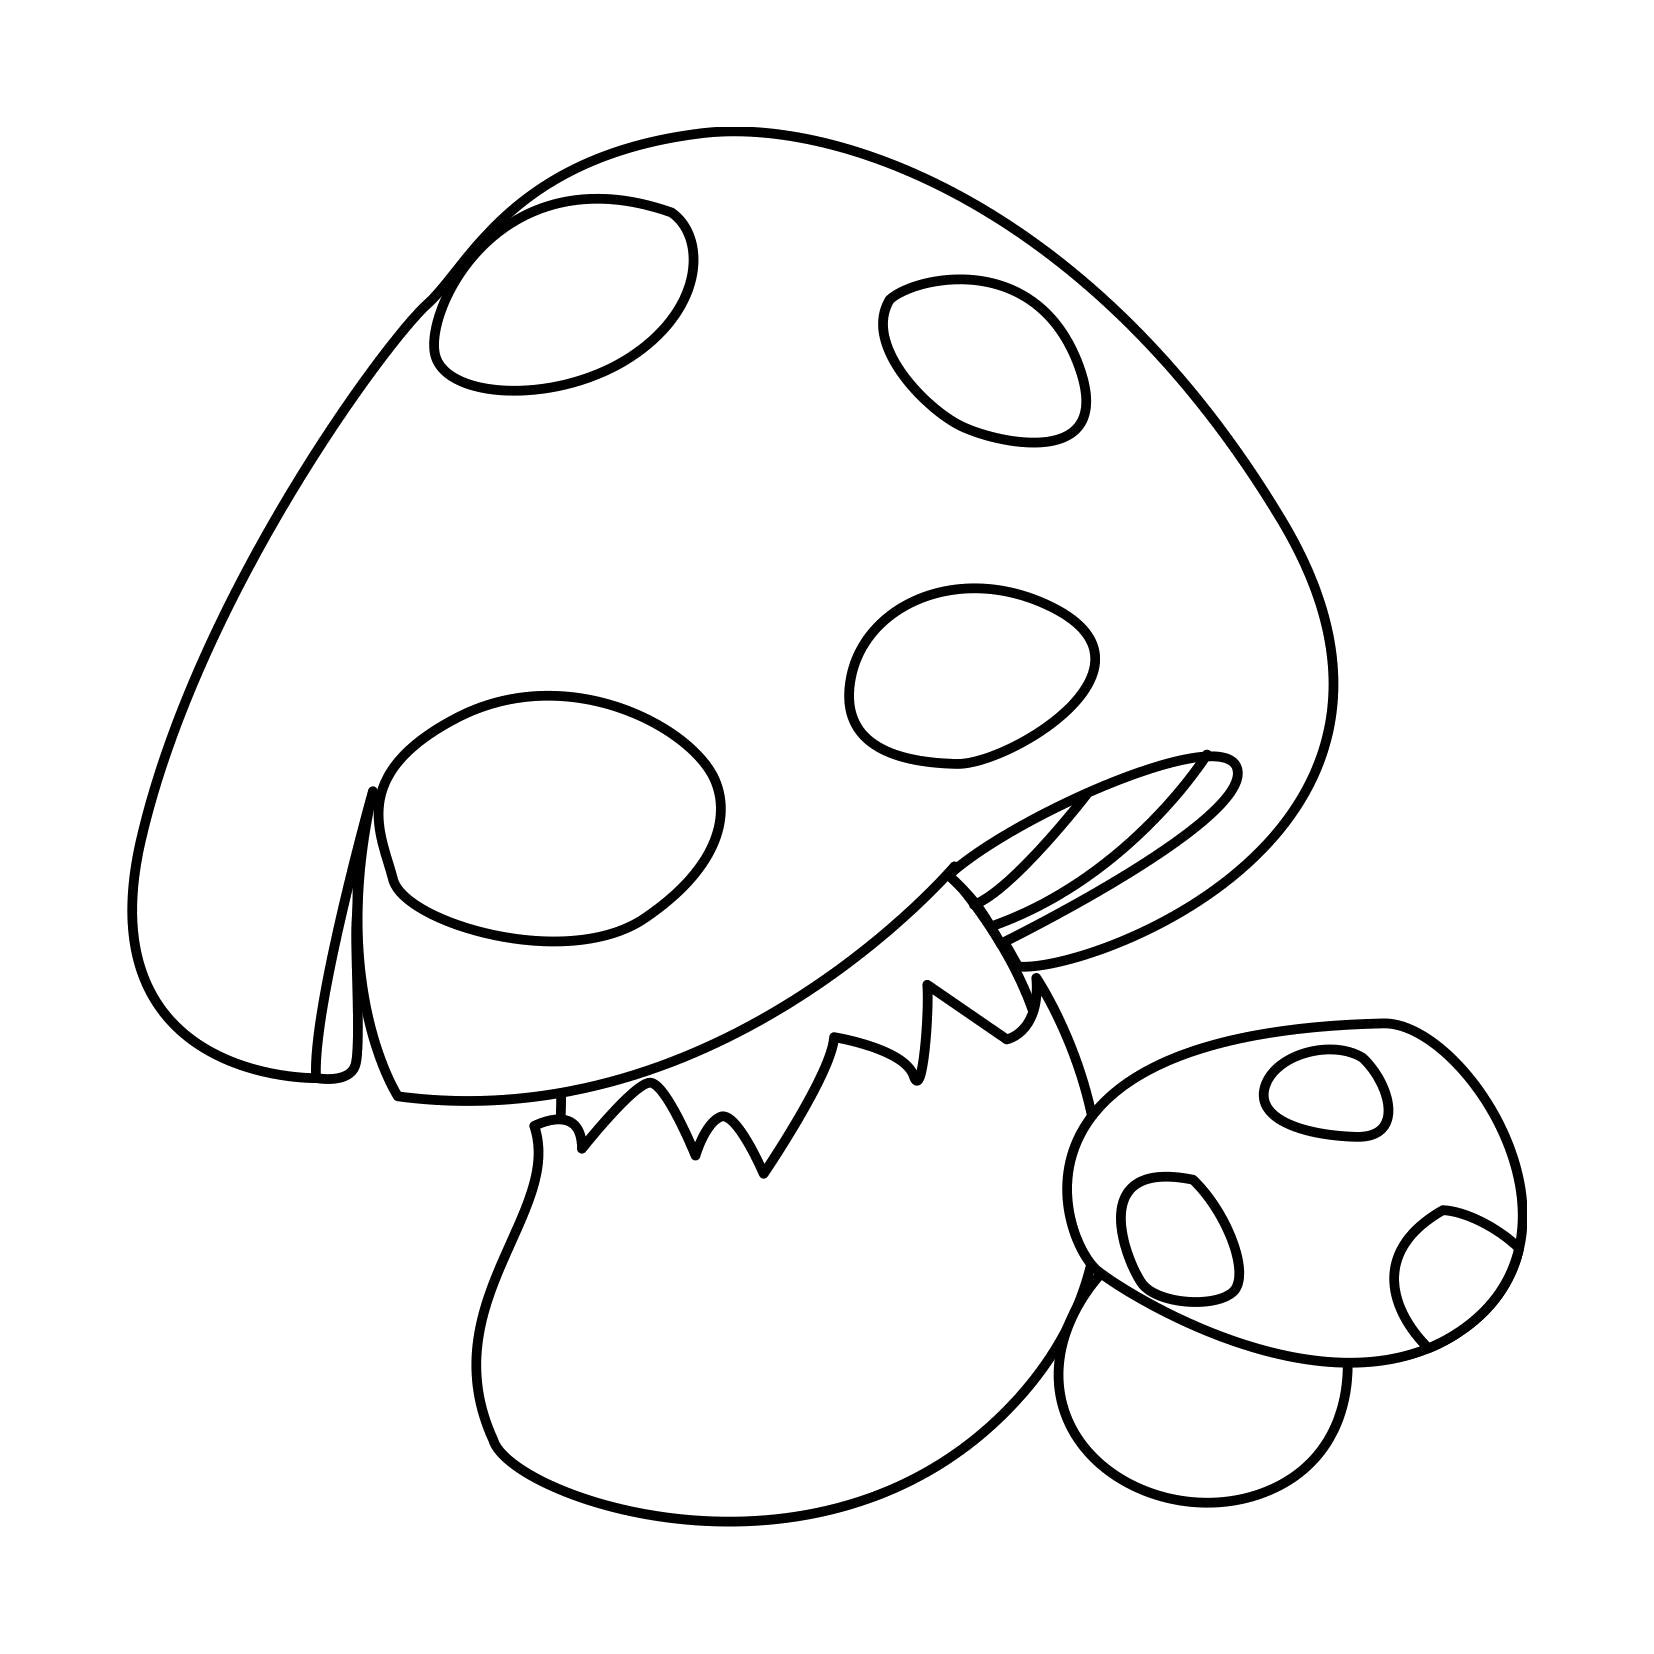 Название: Раскраска Раскраски шаблон гриба шаблон гриба, контур для вырезания из бумаги. Категория: растения. Теги: гриб.